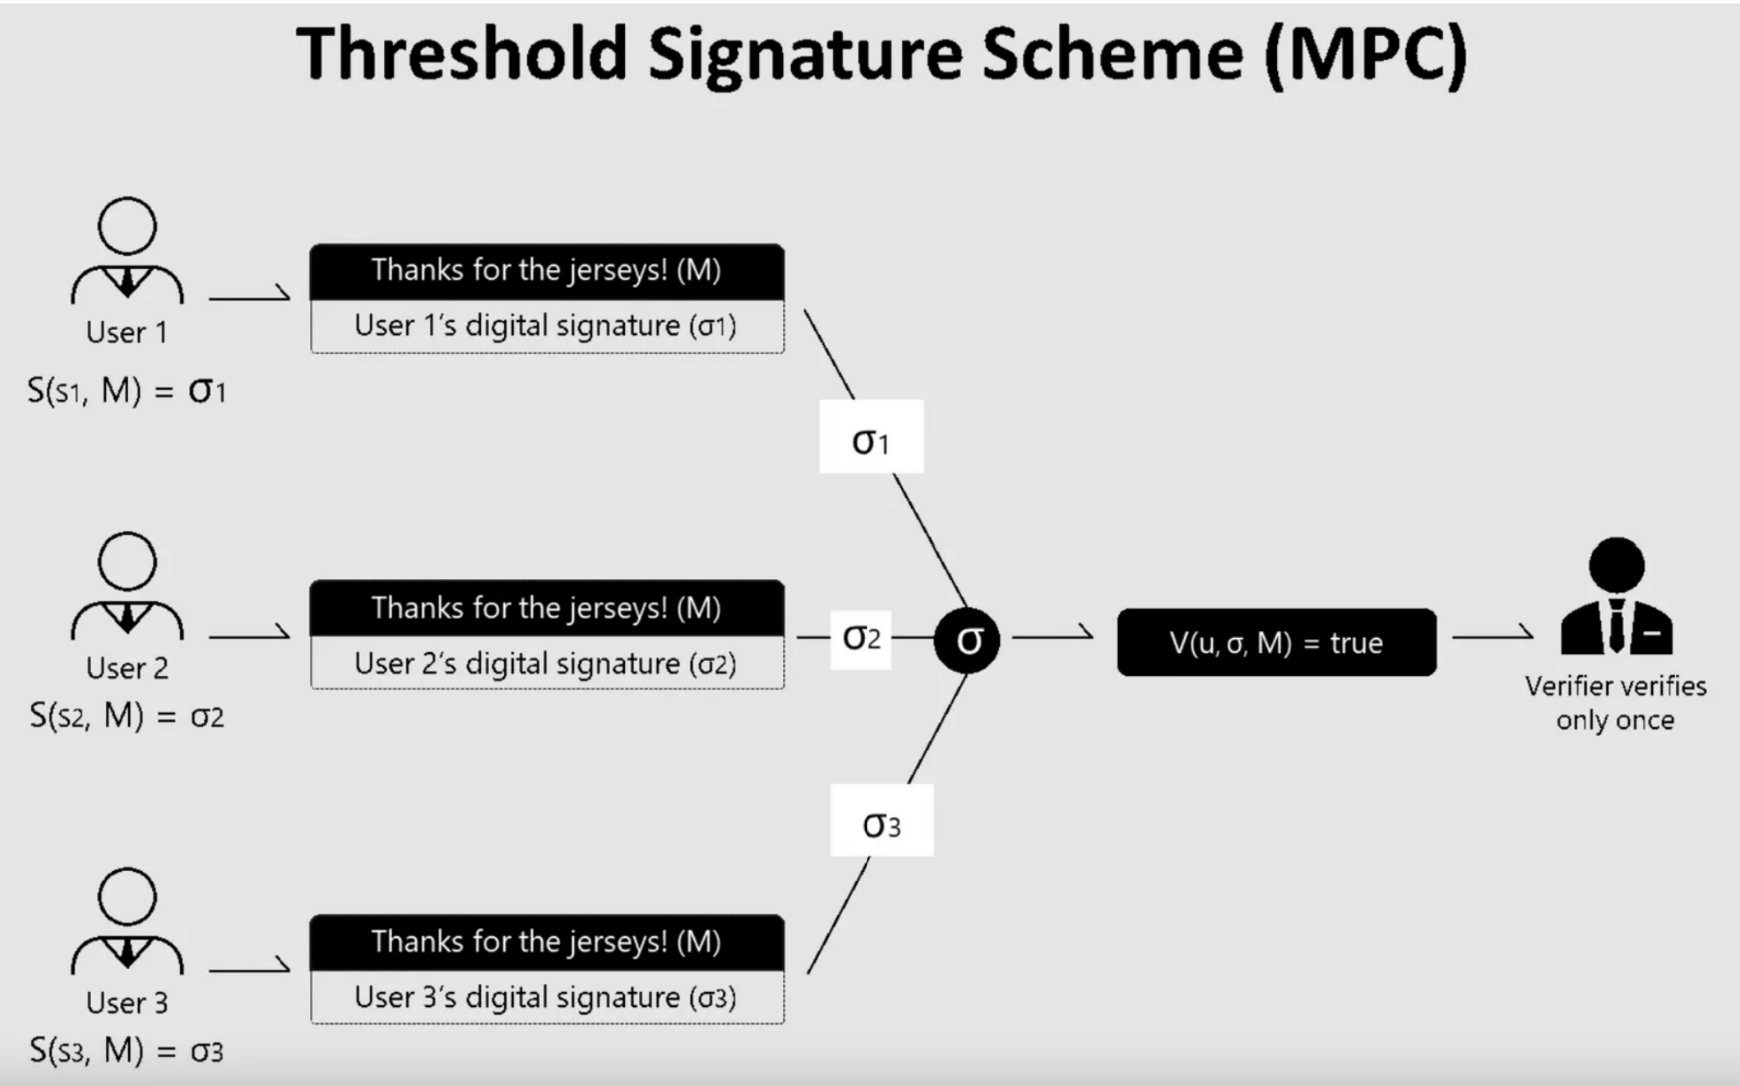 MPC-based threshold signature scheme